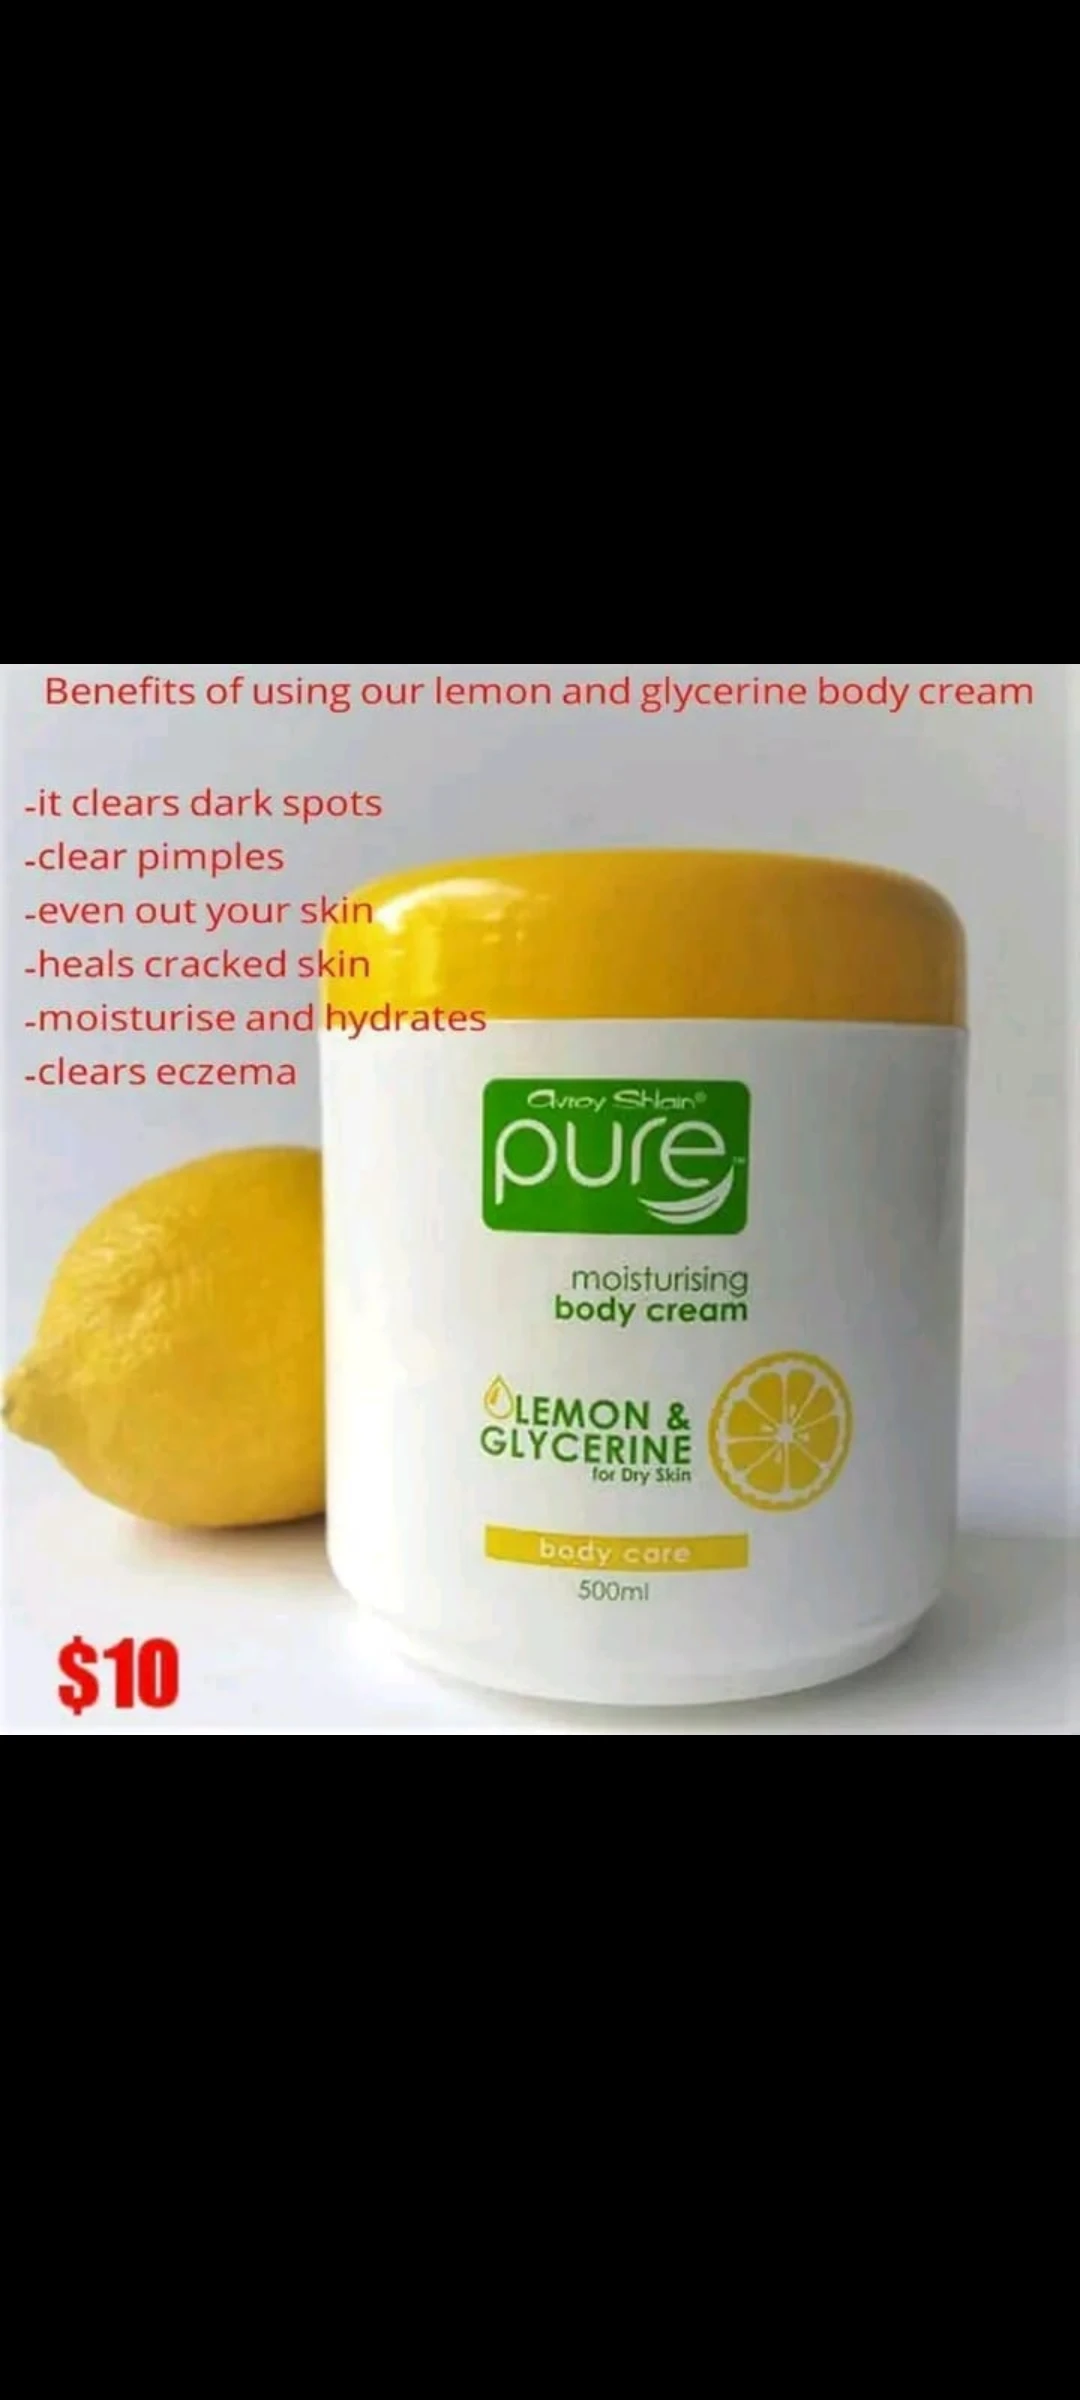 Lemon and glycerin bodycream